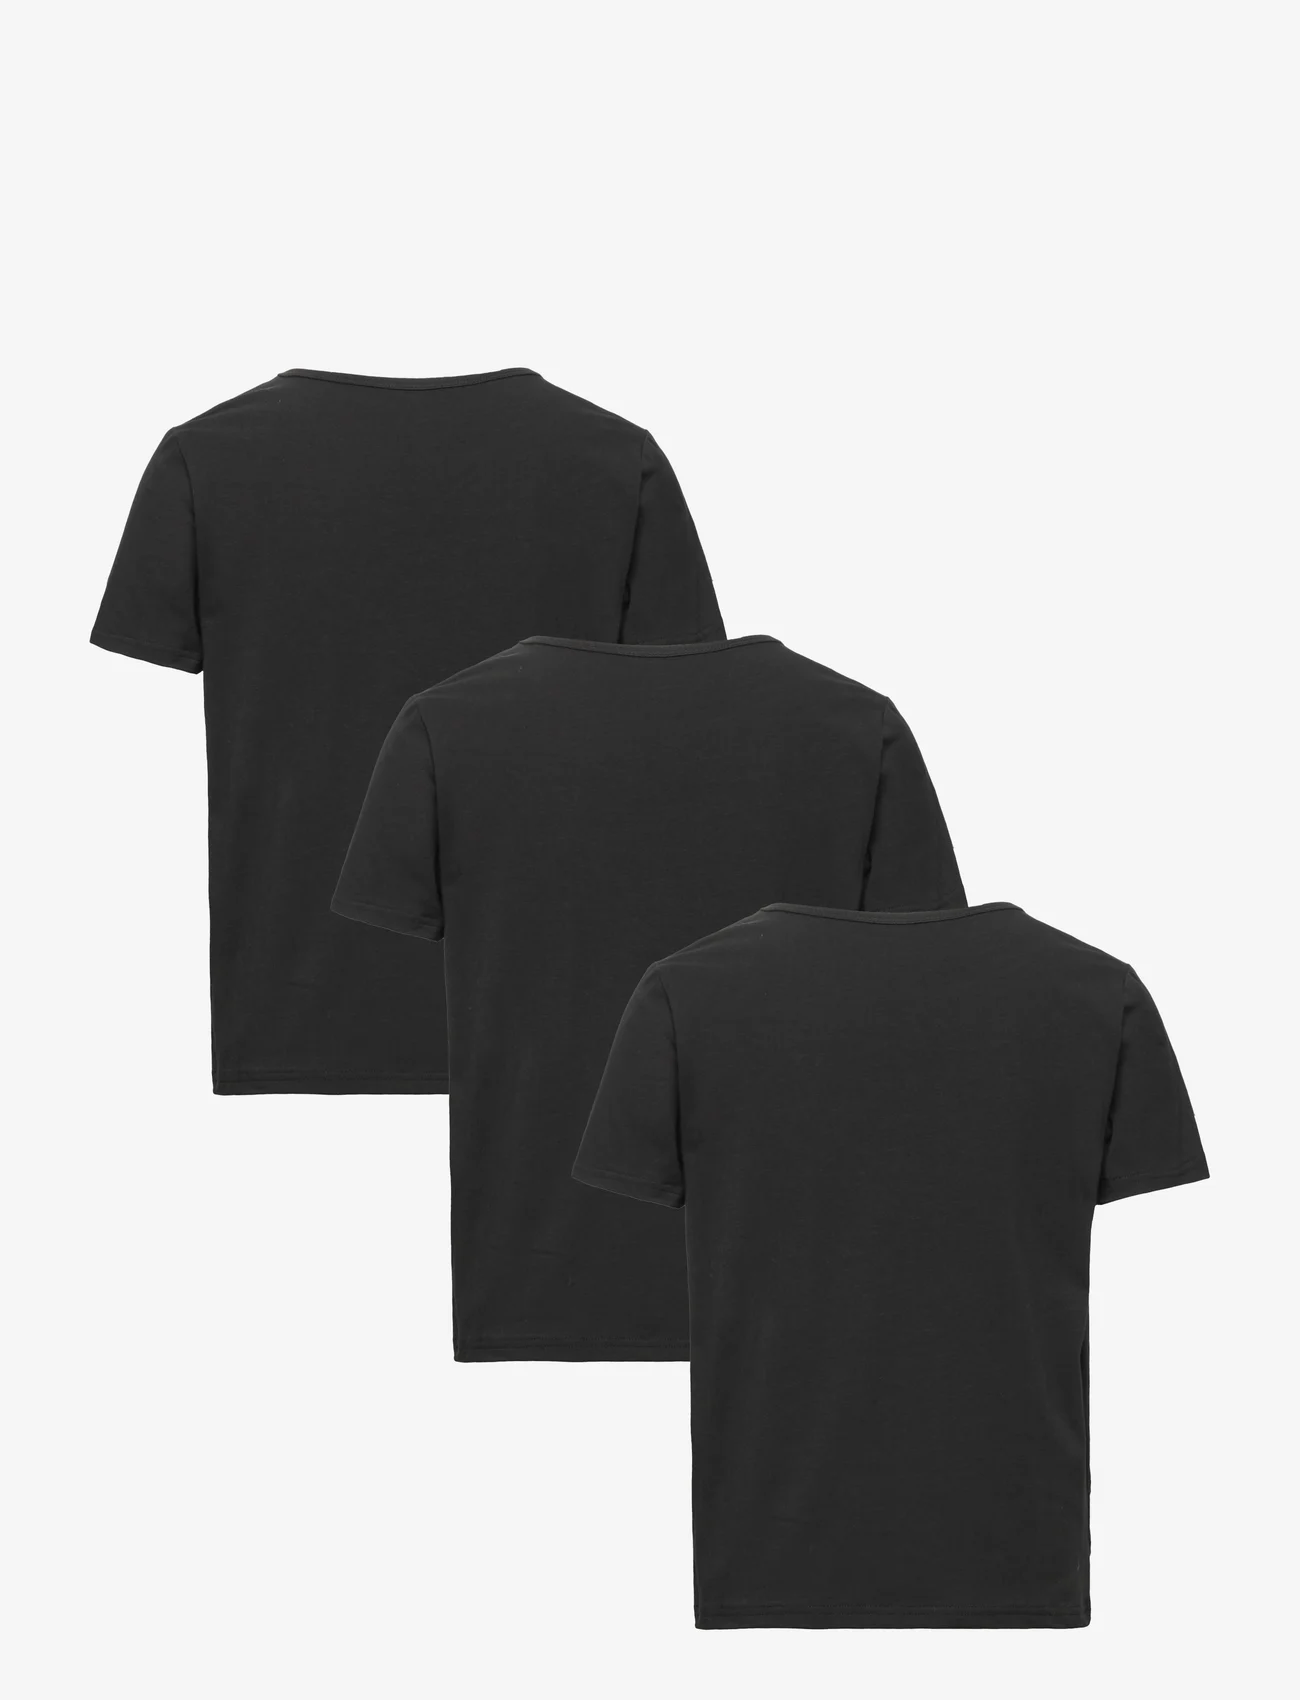 Claudio - Claudio Boys 3-pack T-shirt - kortärmade - black - 1